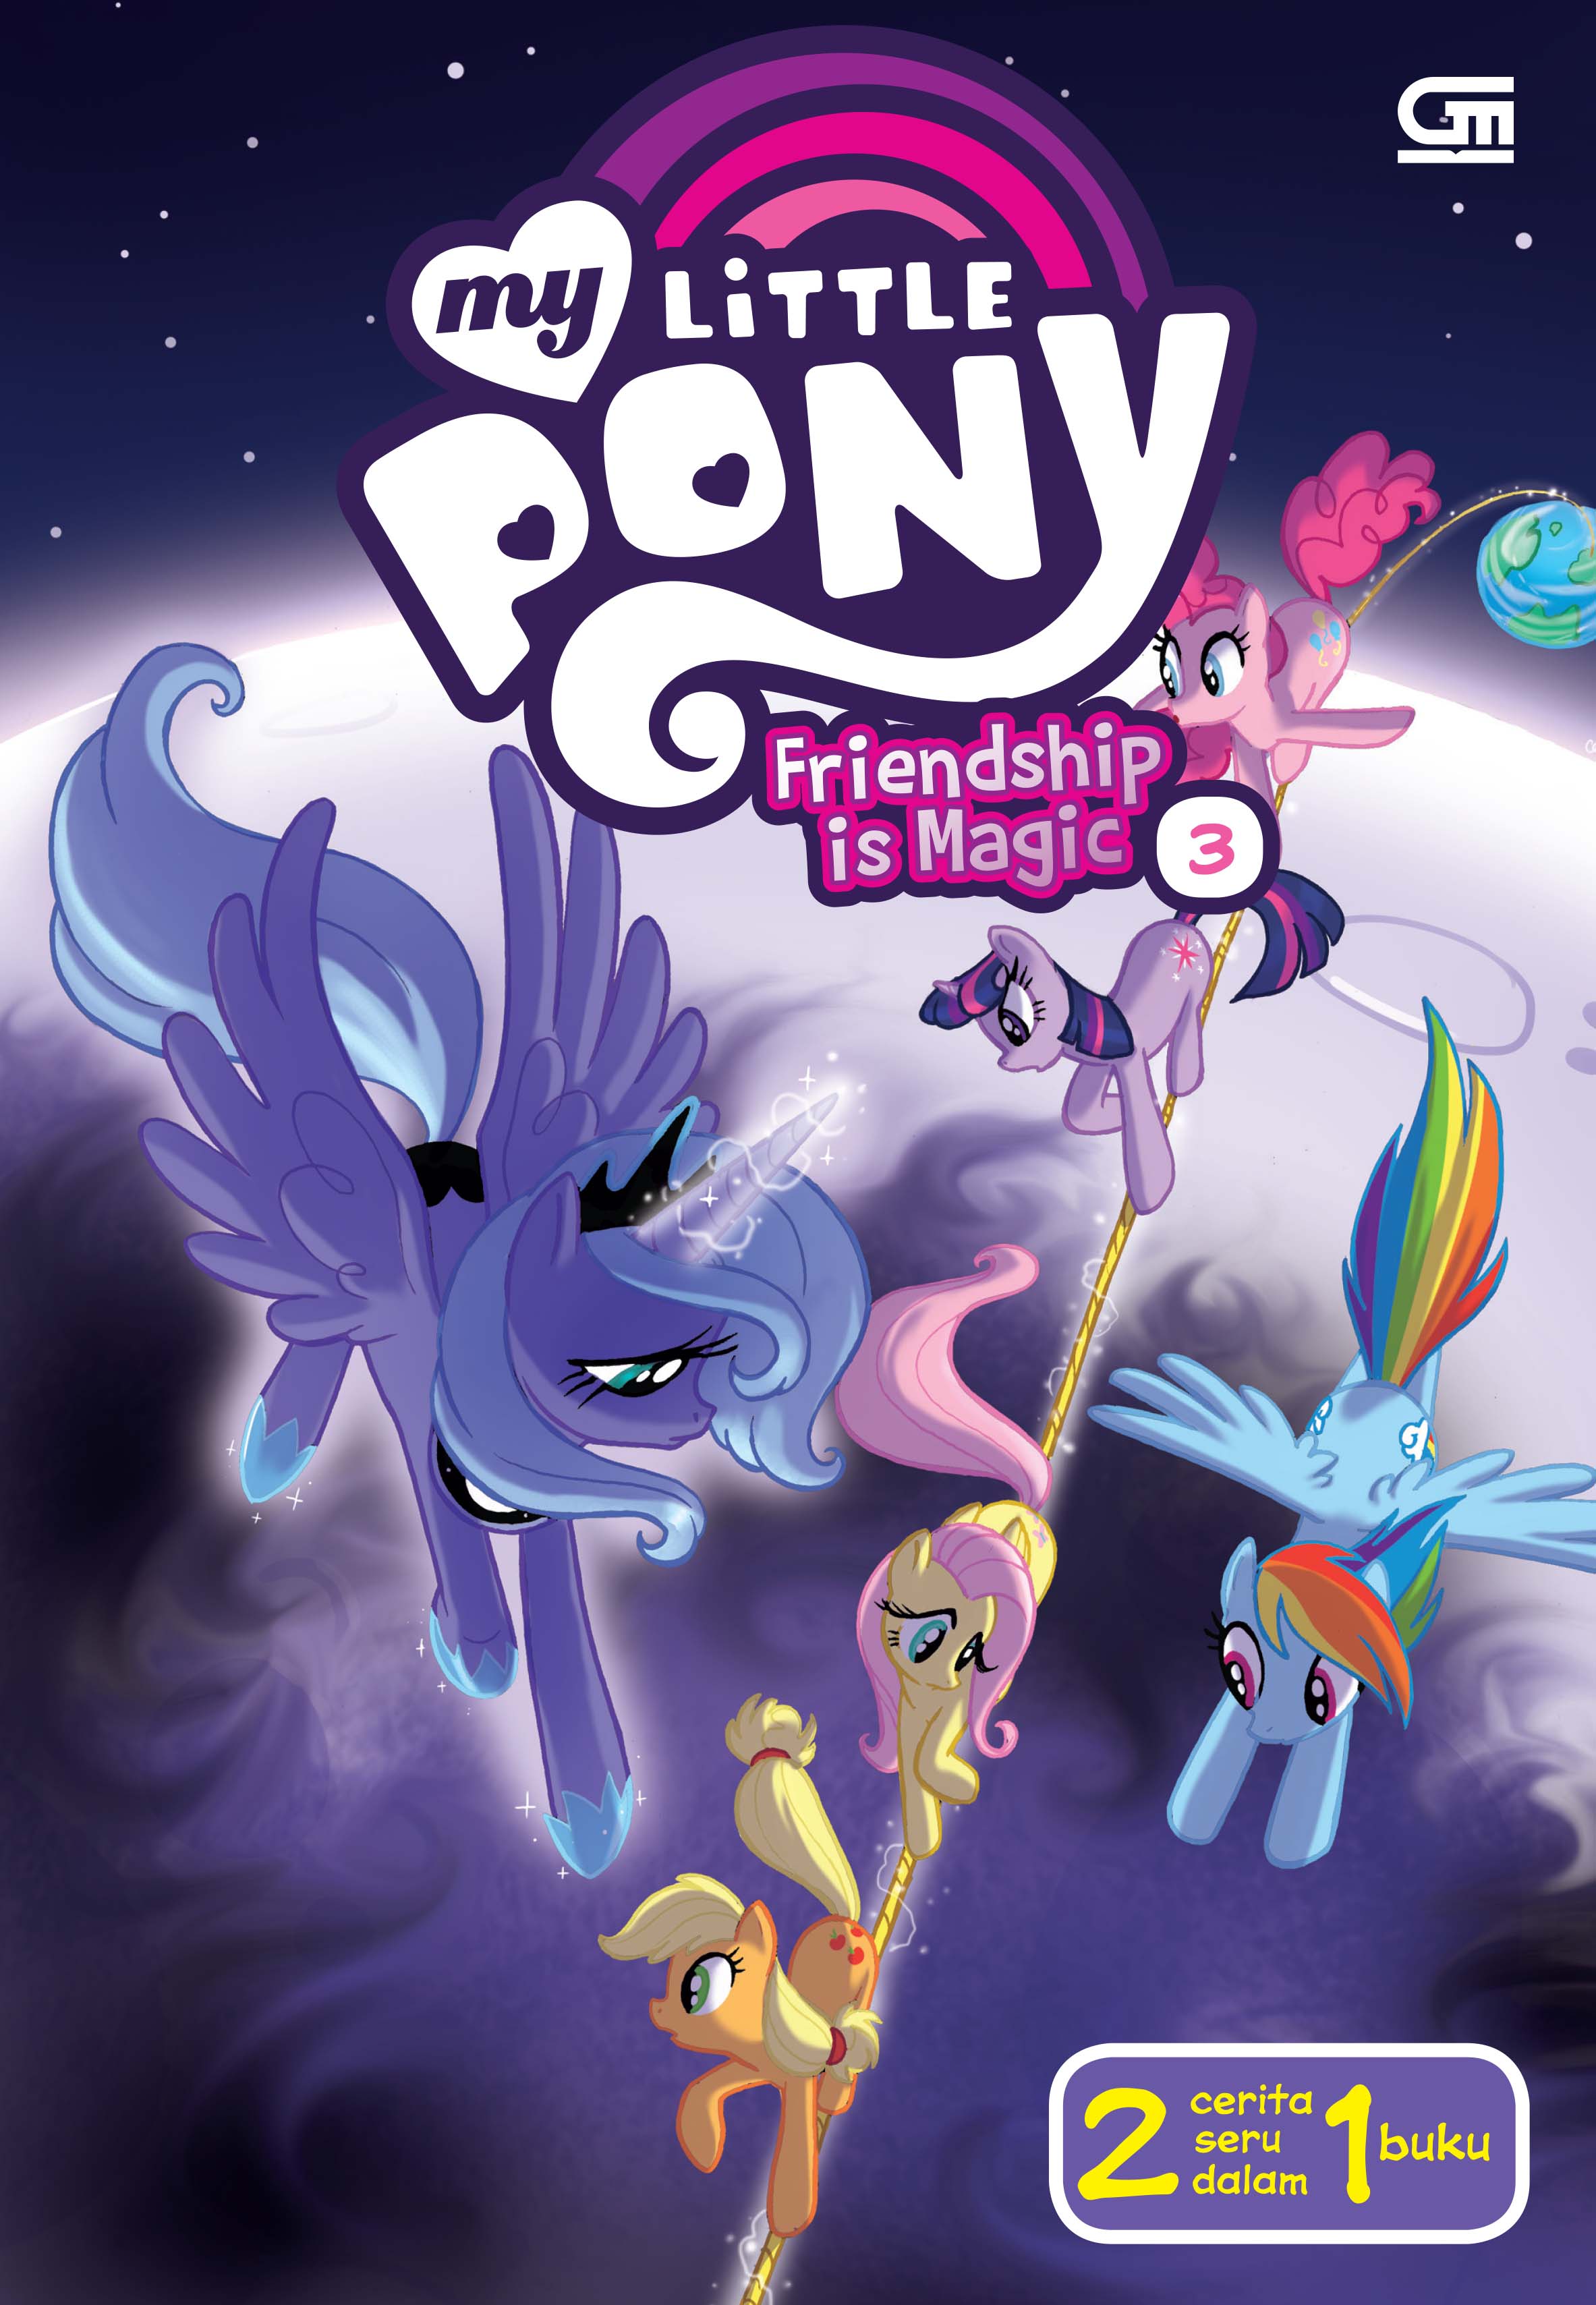 My Little Pony: Friendship is Magic#3